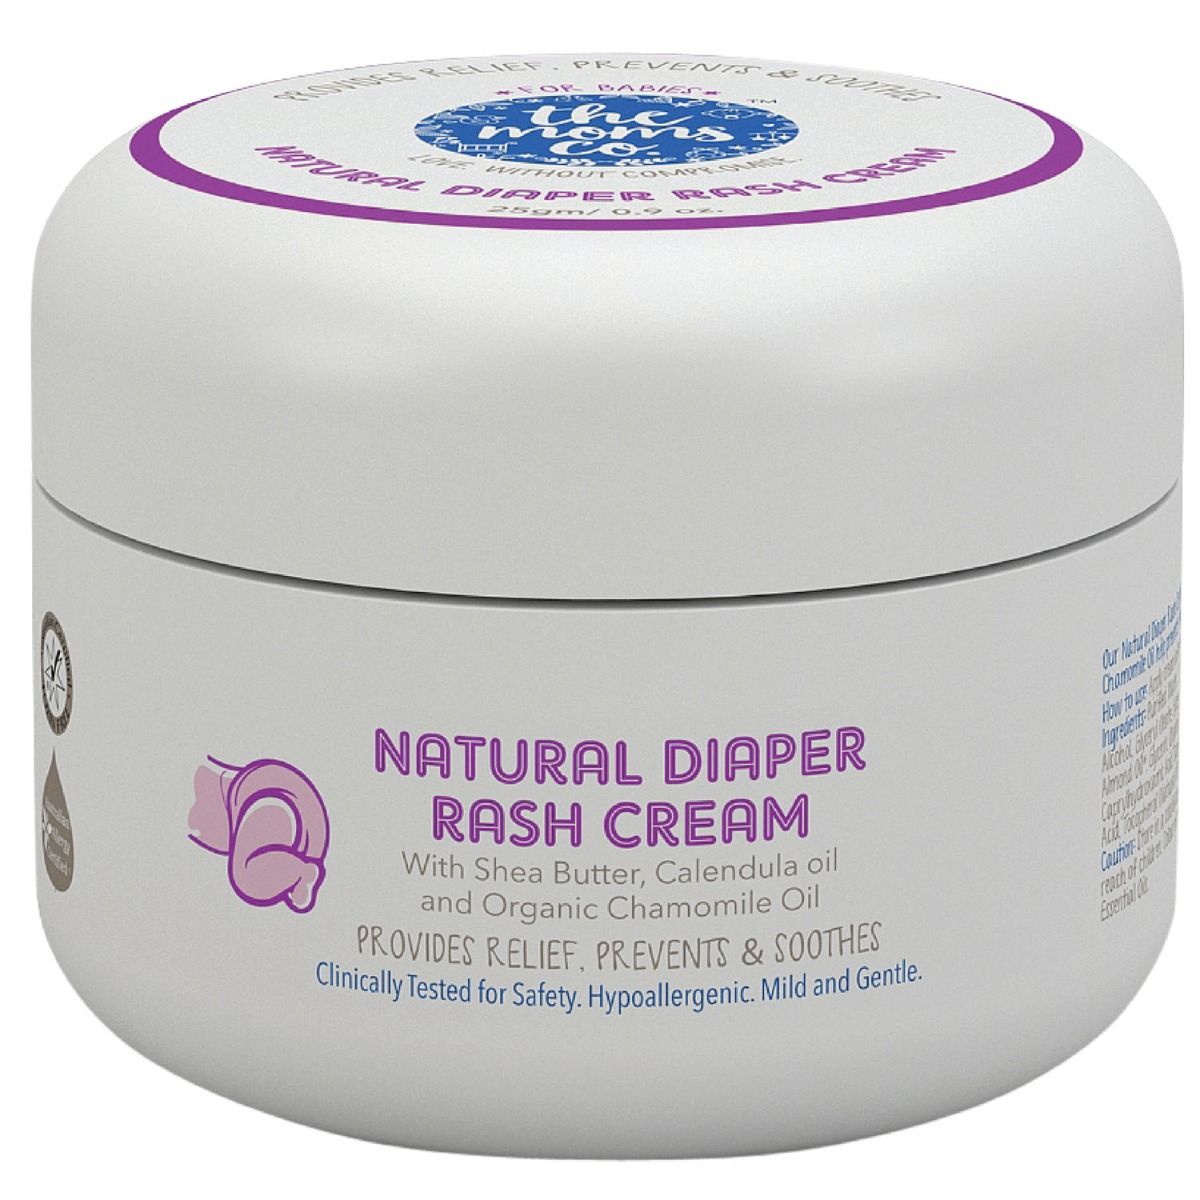 Buy The Moms Co. Natural Diaper Rash Cream, 25 gm Online